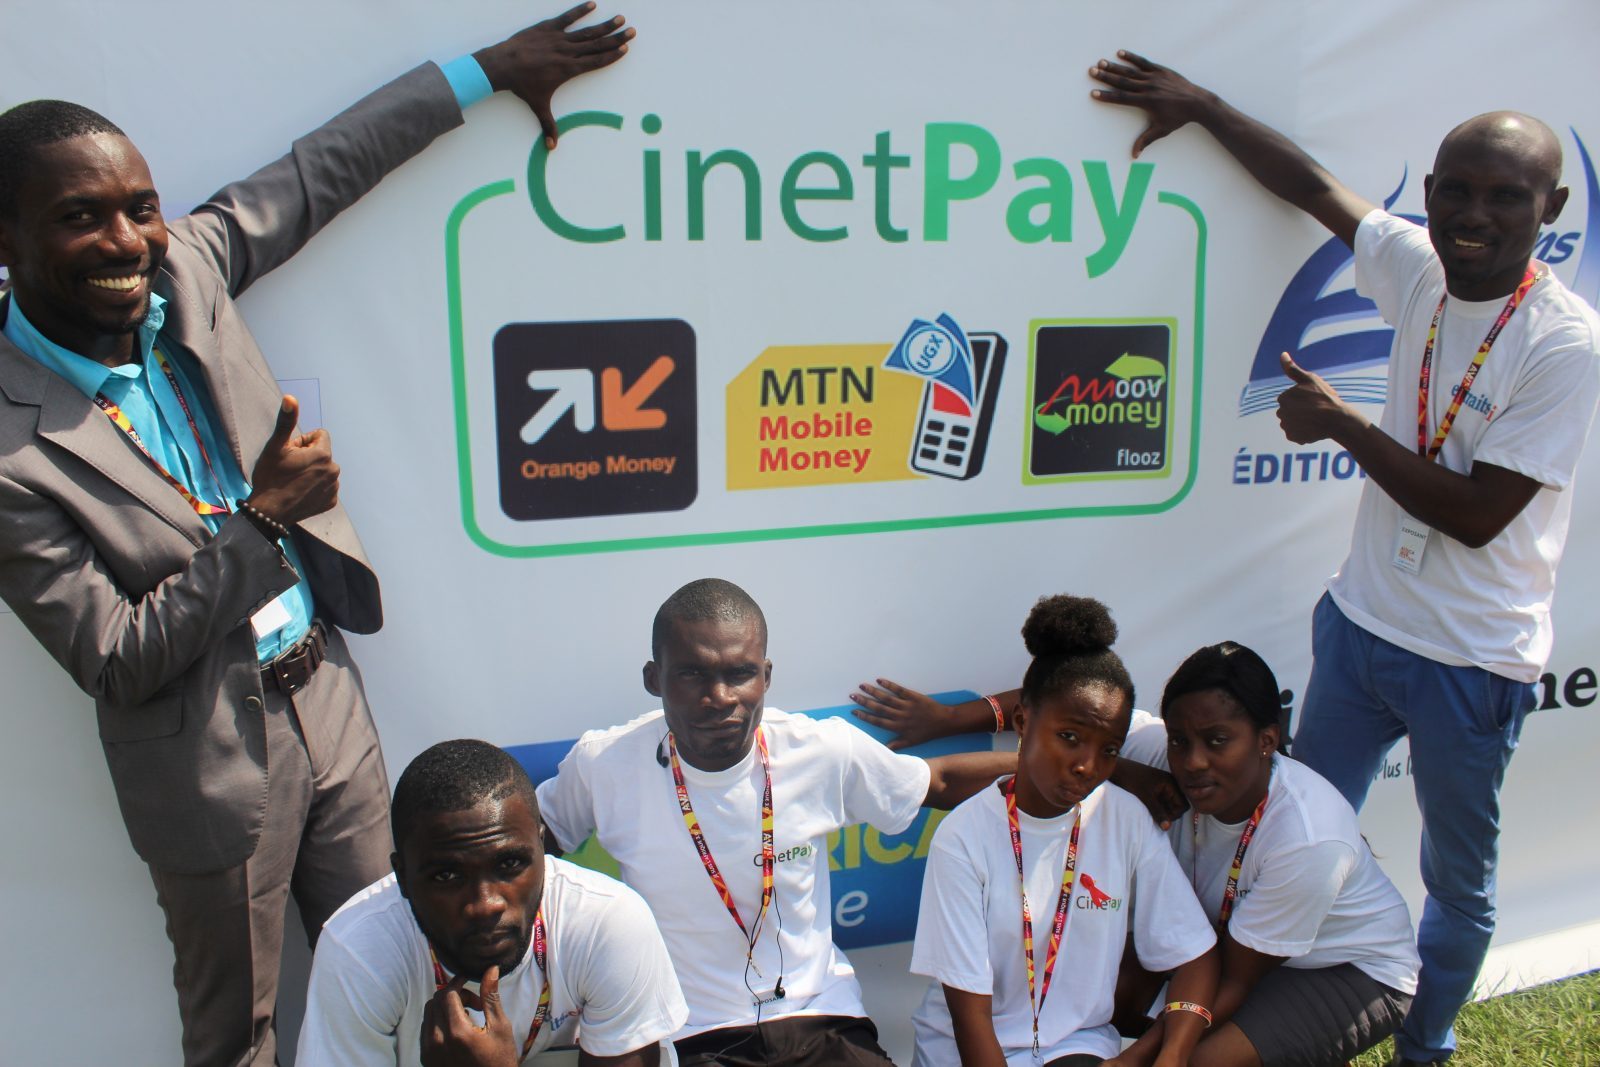 Ivorian fintech CinetPay raises $2.4 million from Flutterwave and 4DX Ventures.